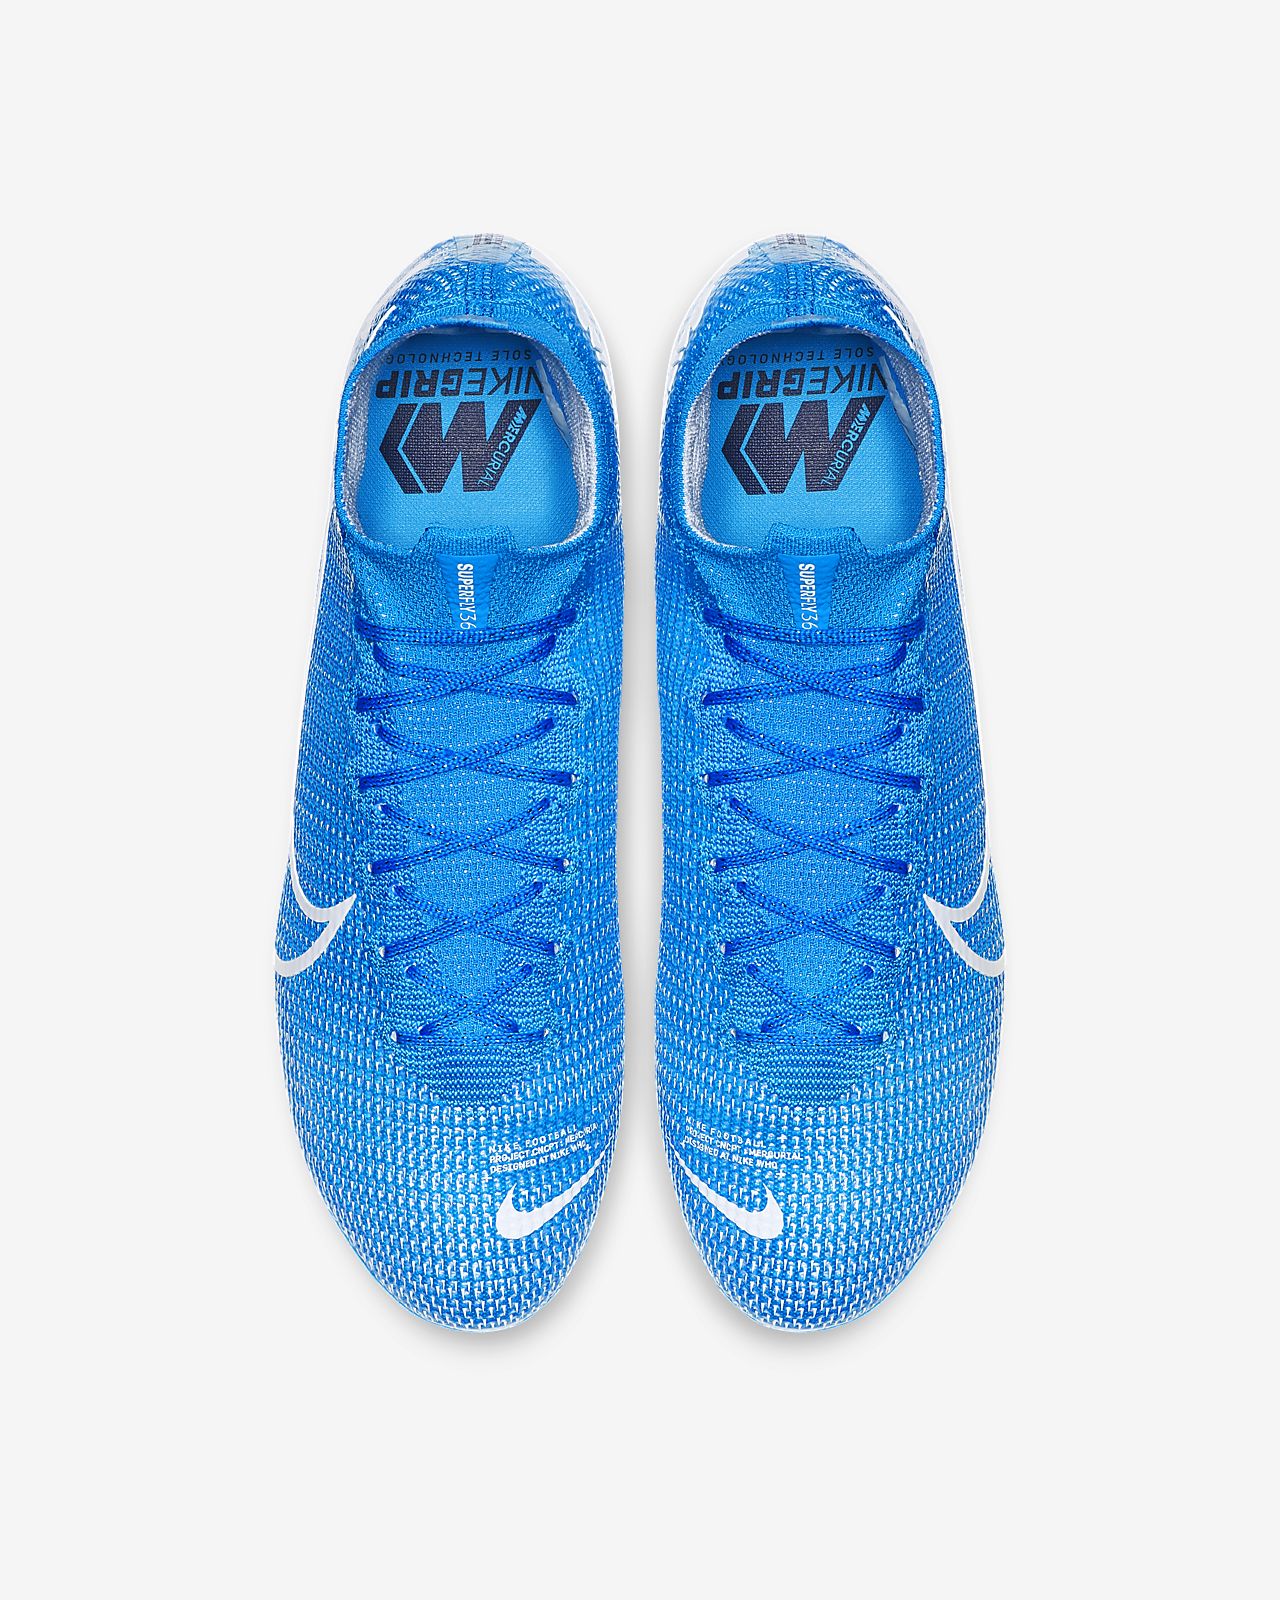 Nike Mercurial Superfly 7 Elite TF Blue Hero White soccerloco